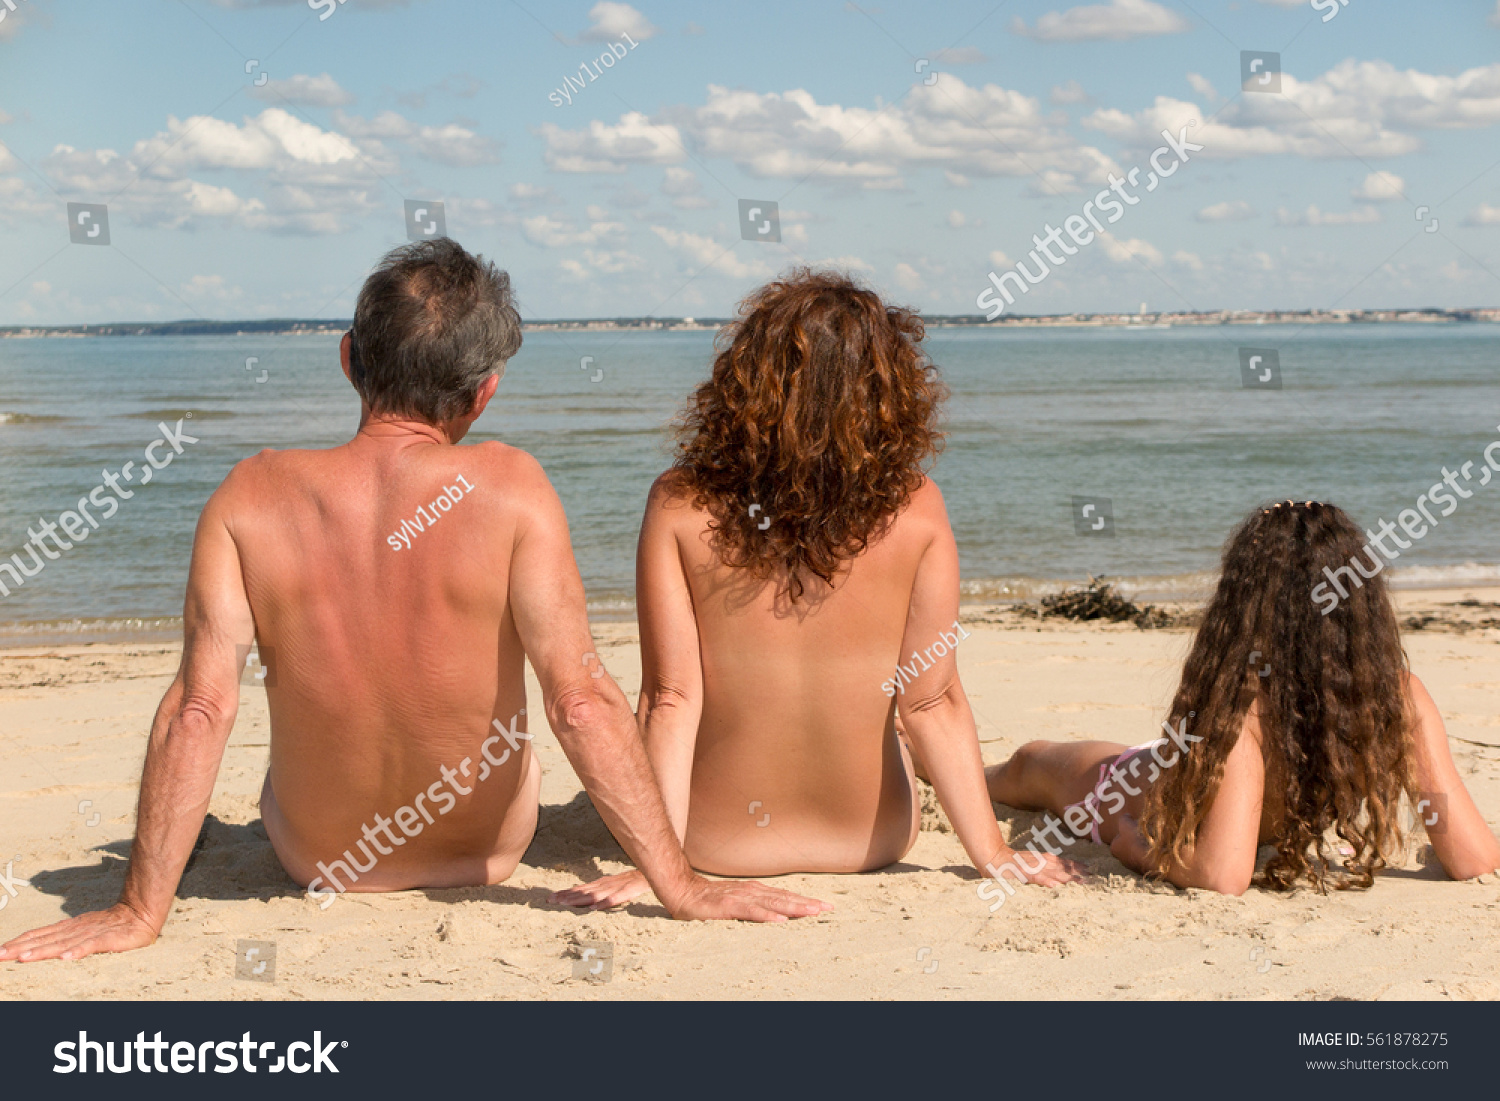 cindy garciano add nudist family story photo